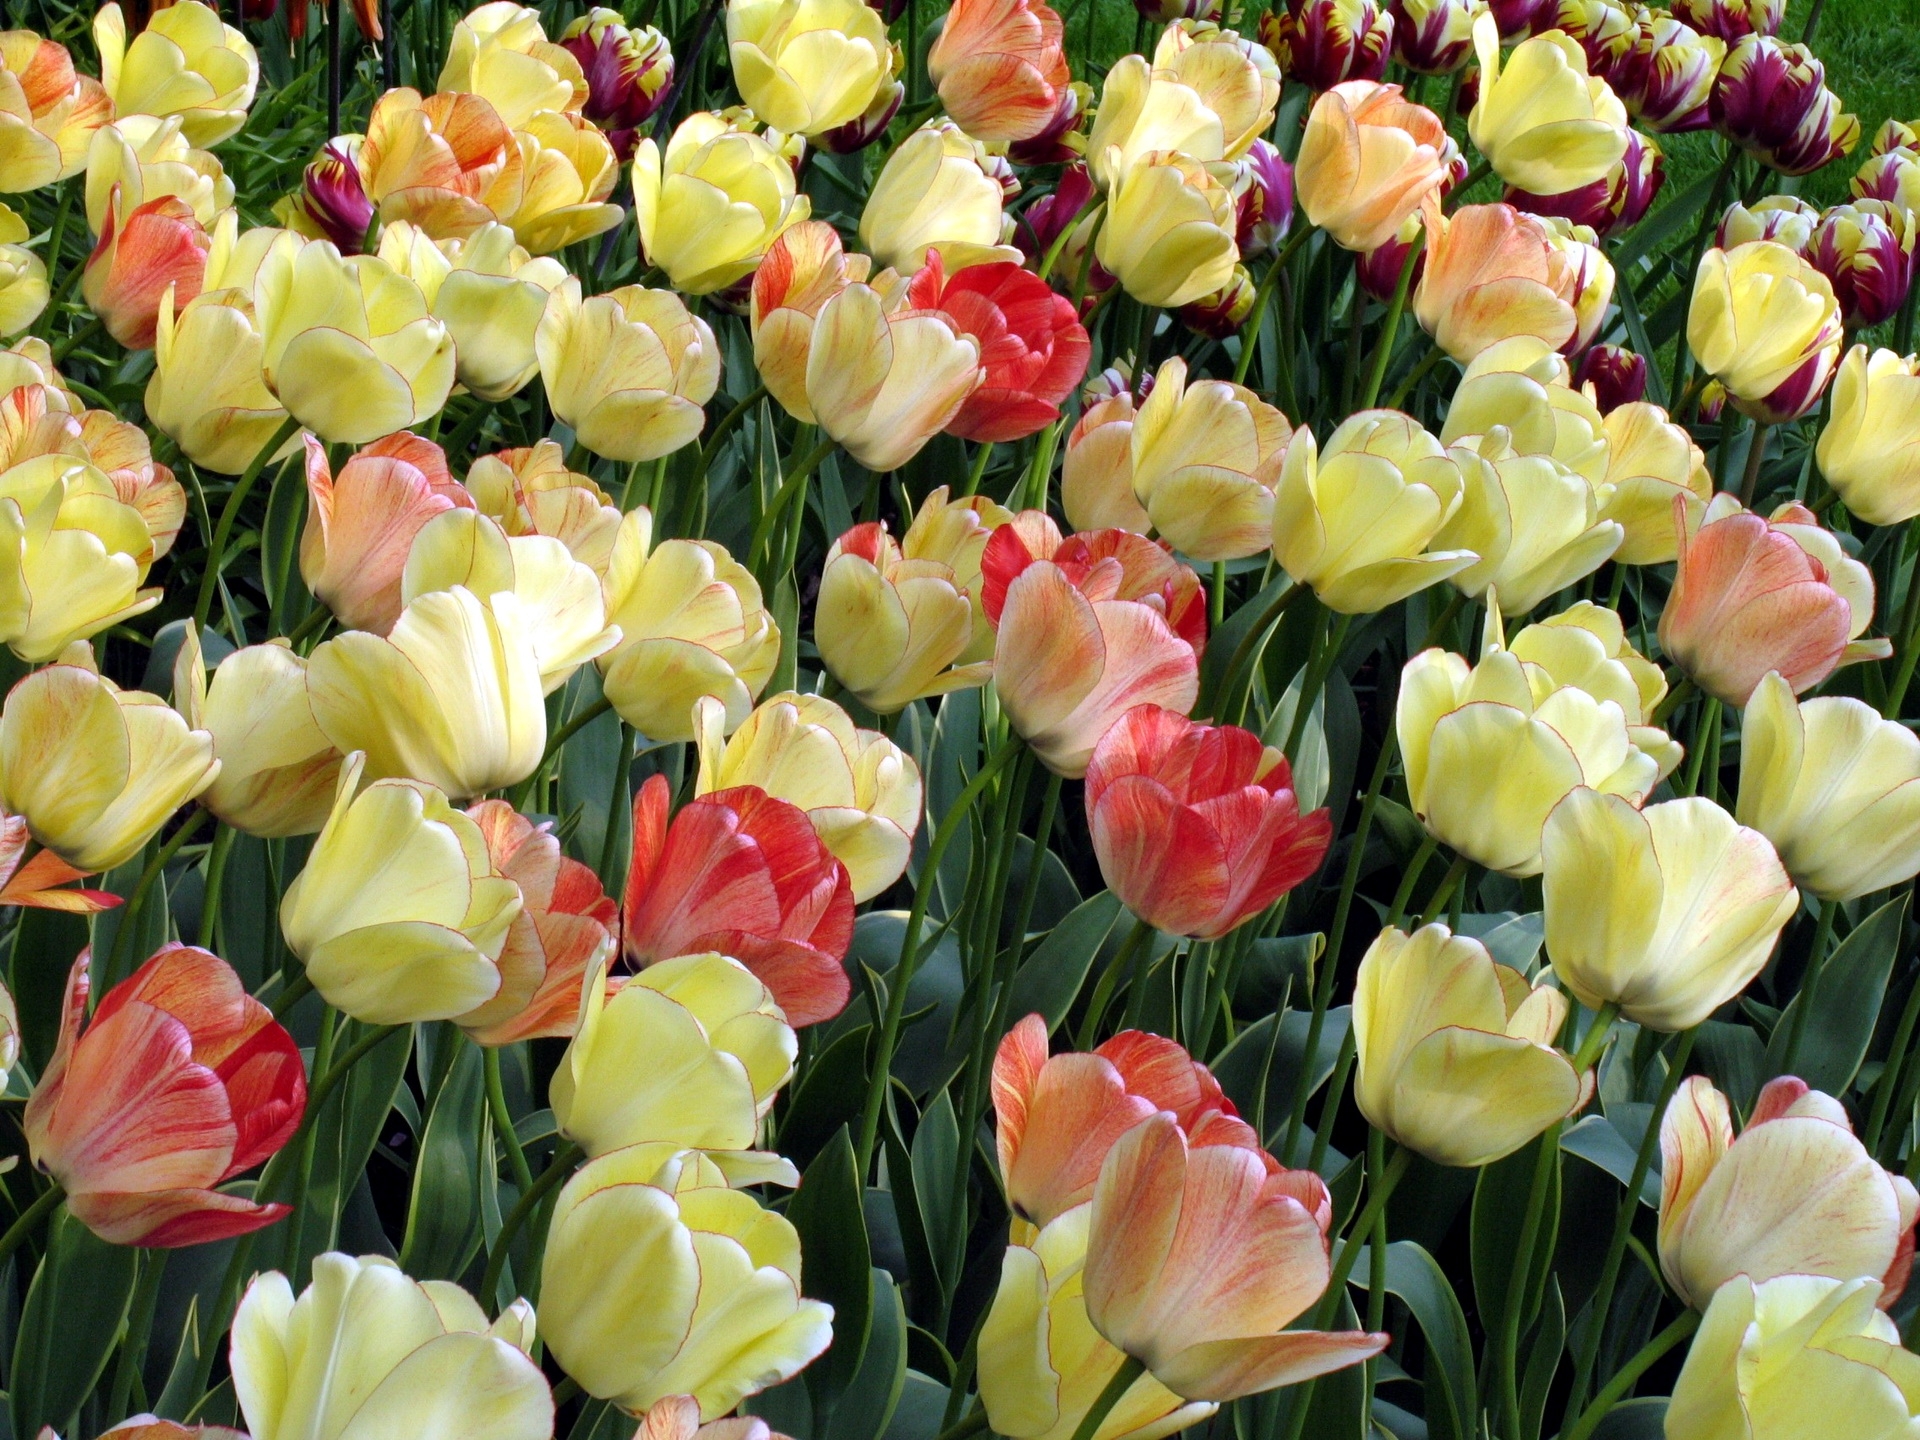 tulips, flowers, flower bed, flowerbed, disbanded, loose, variegated, mottled High Definition image